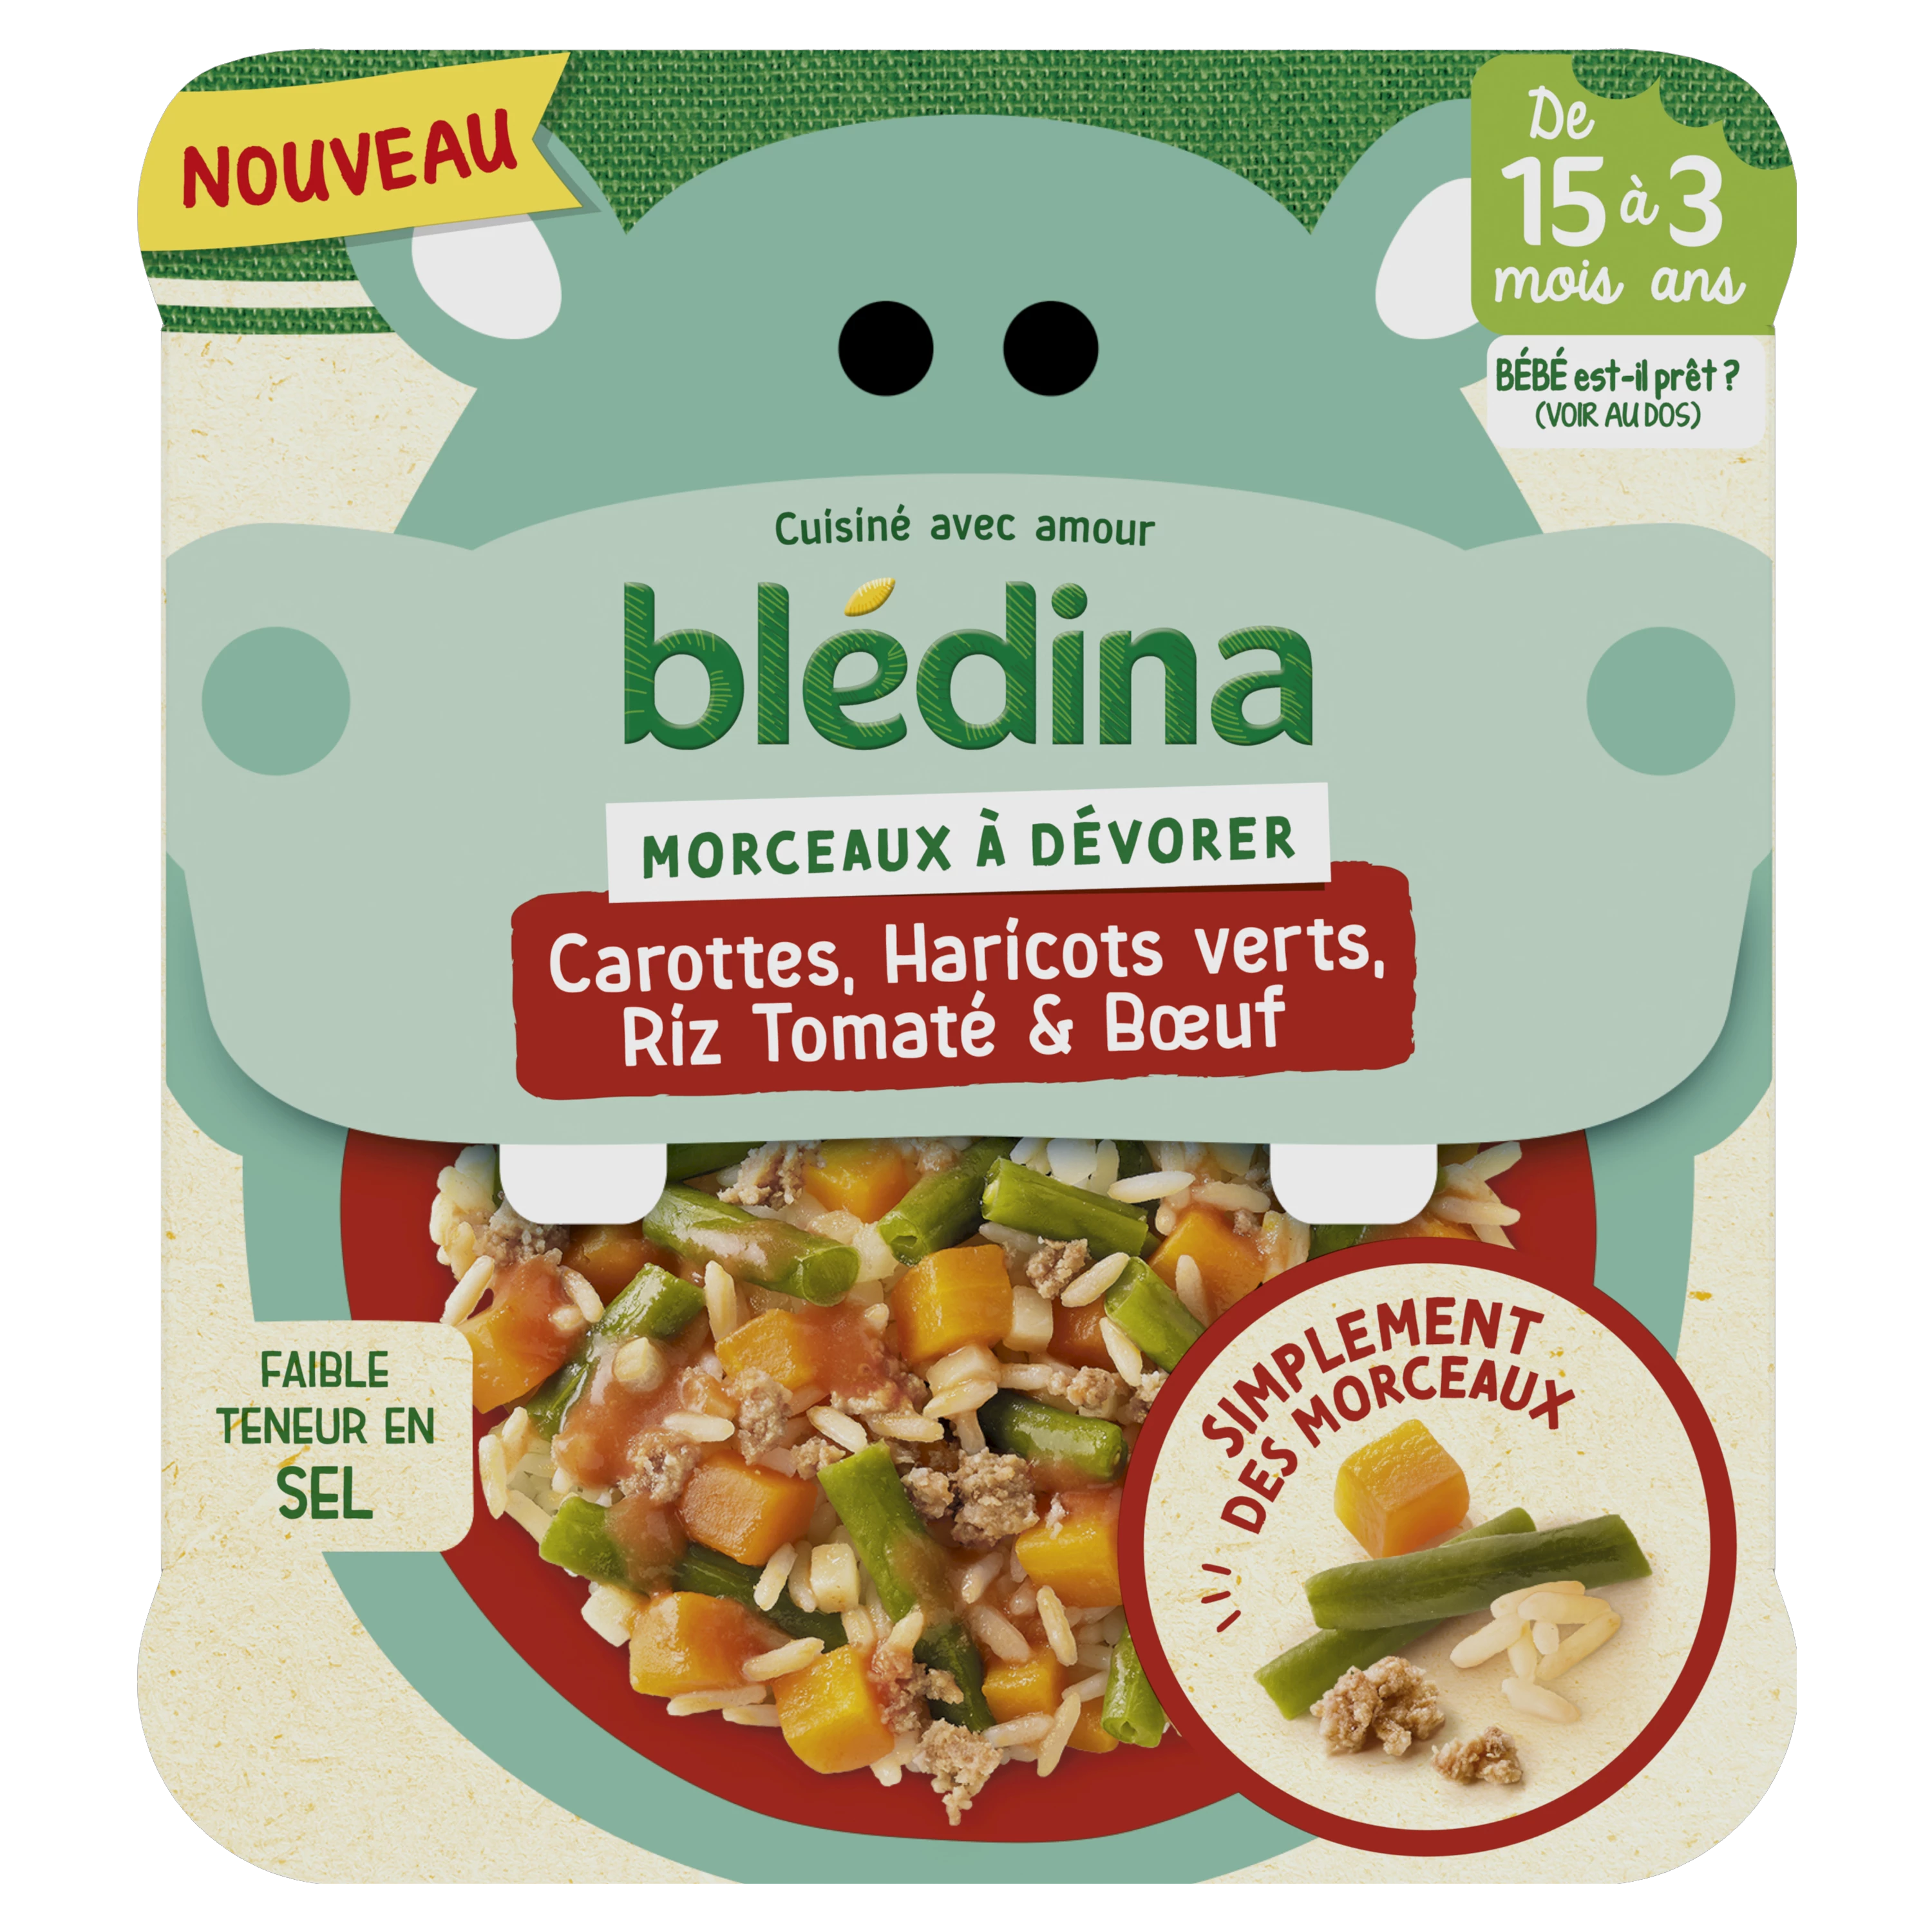 Blédina Blediner Evening Dish Cereals And Vegetables From 6 Months